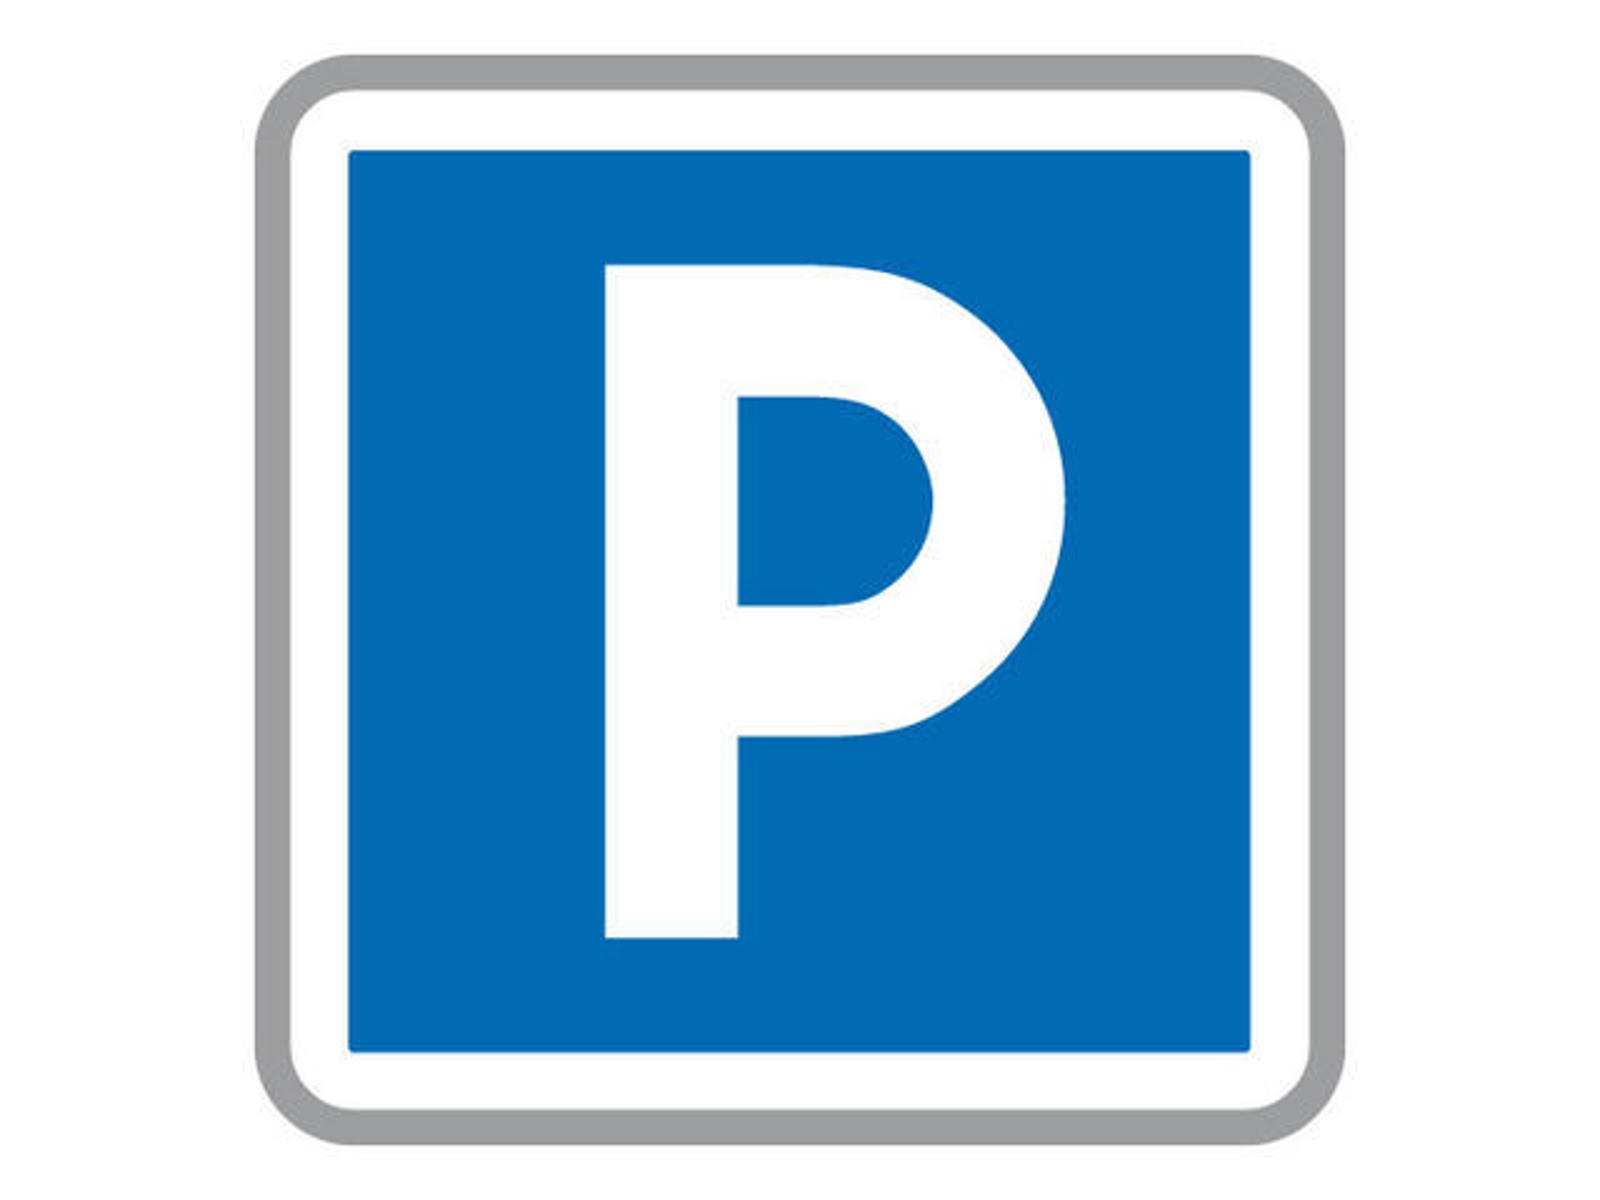 Parking te  koop in Sint-Lambrechts-Woluwe 1200 18000.00€  slaapkamers m² - Zoekertje 1368113